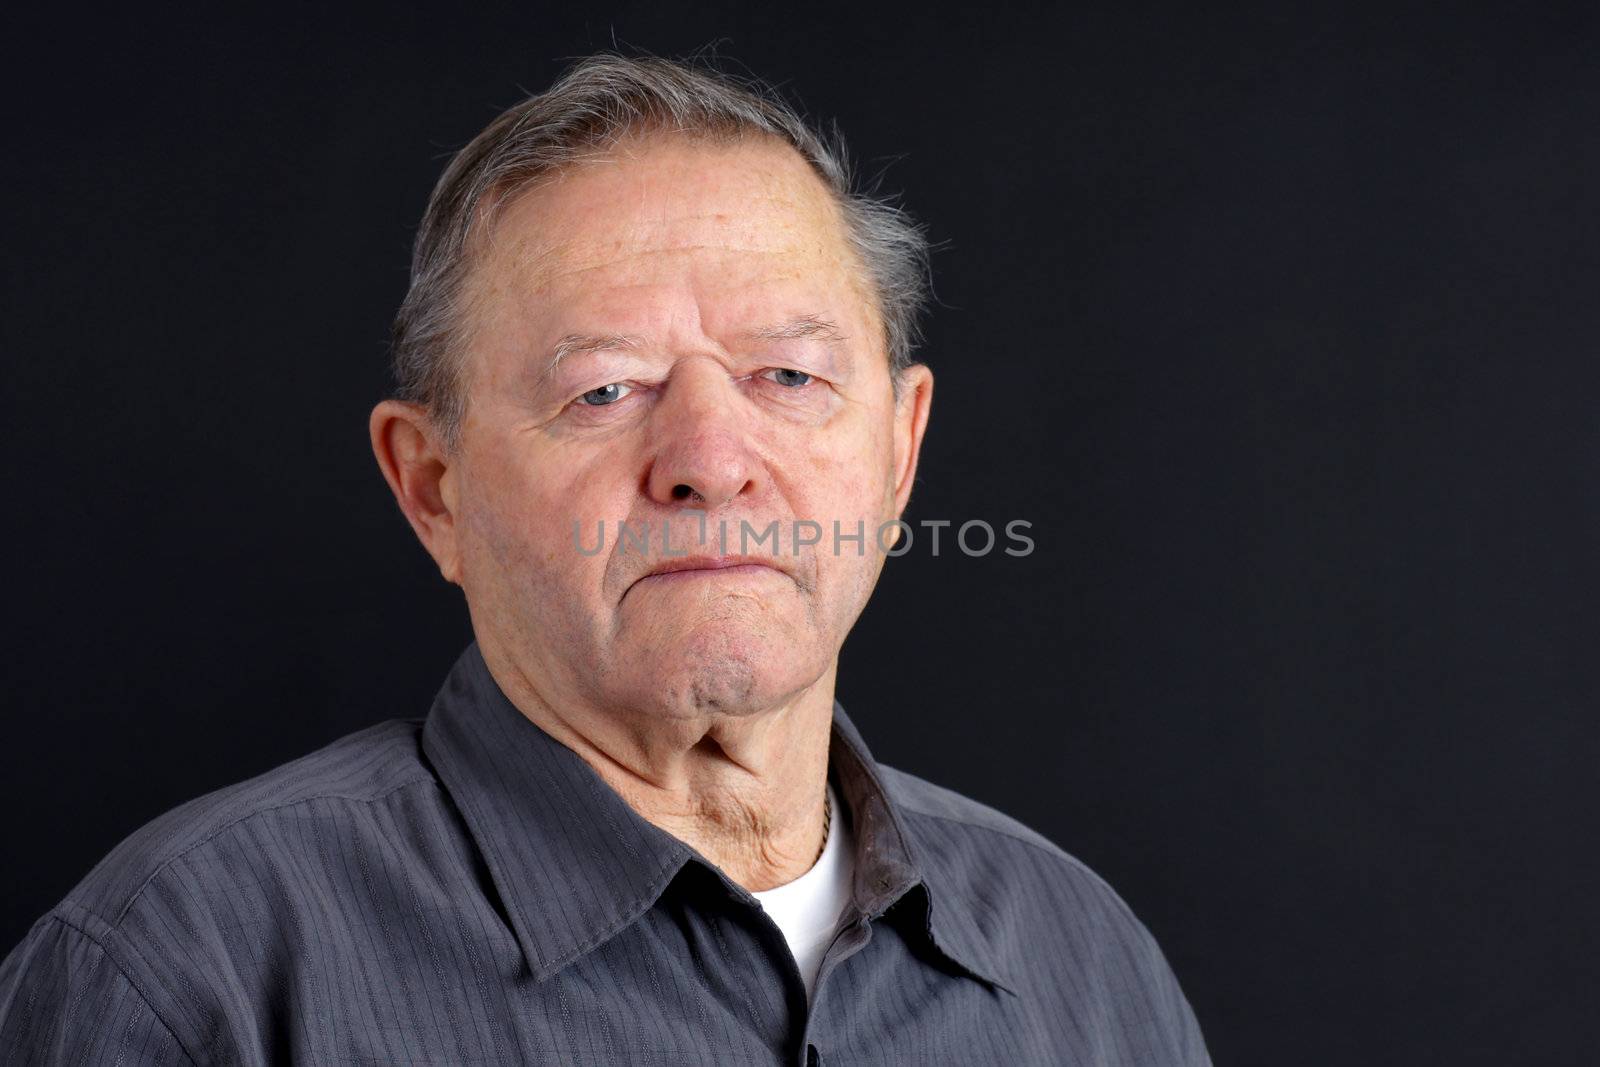 Portrait of sad or depressed senior man looking down over dark background, great details.